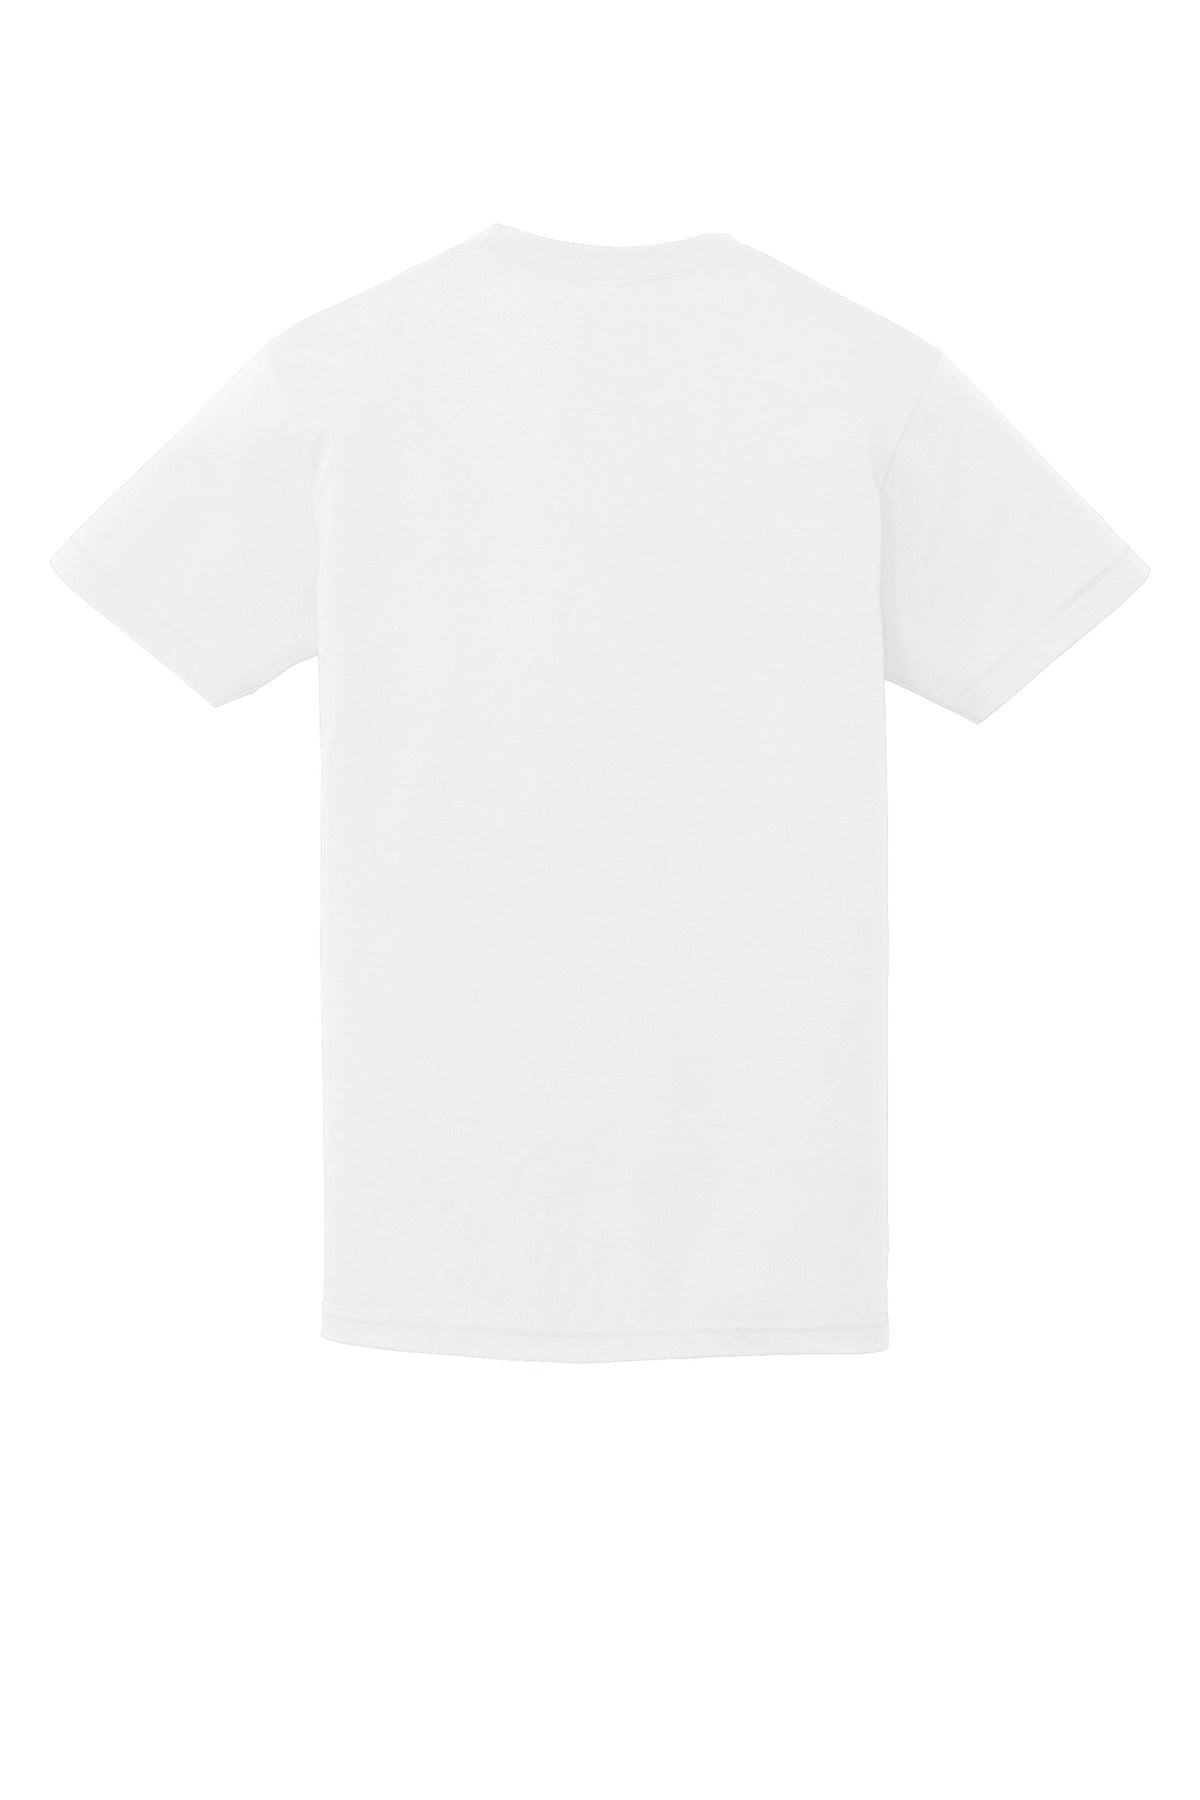 American Apparel Poly-Cotton T-Shirt. BB401W